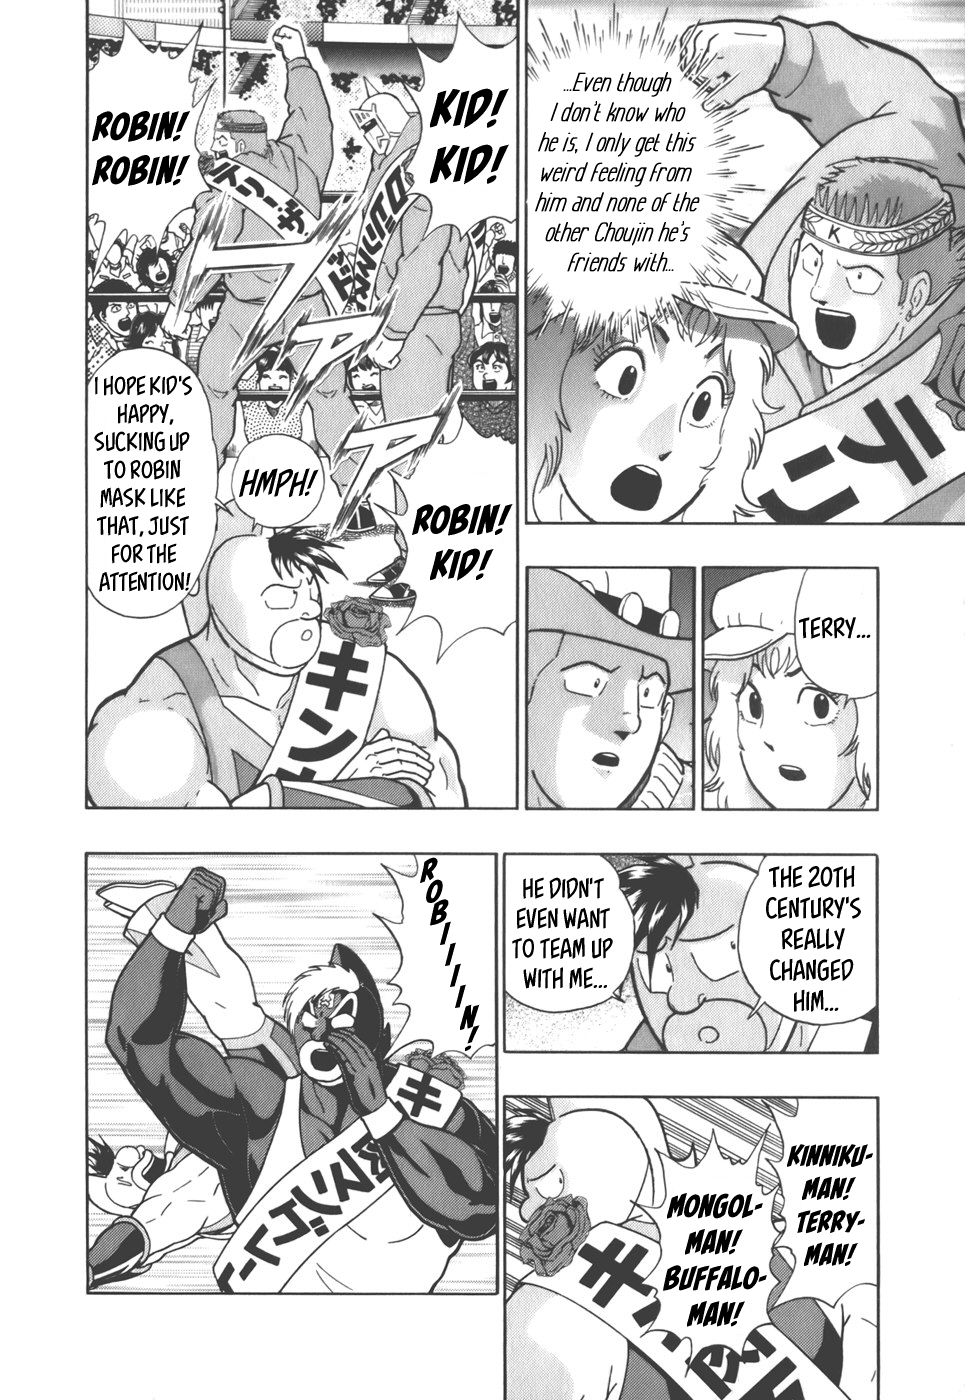 Kinnikuman Nisei: Ultimate Chojin Tag Vol. 4 Ch. 36 The Bell of a Stormy Battle Rings!